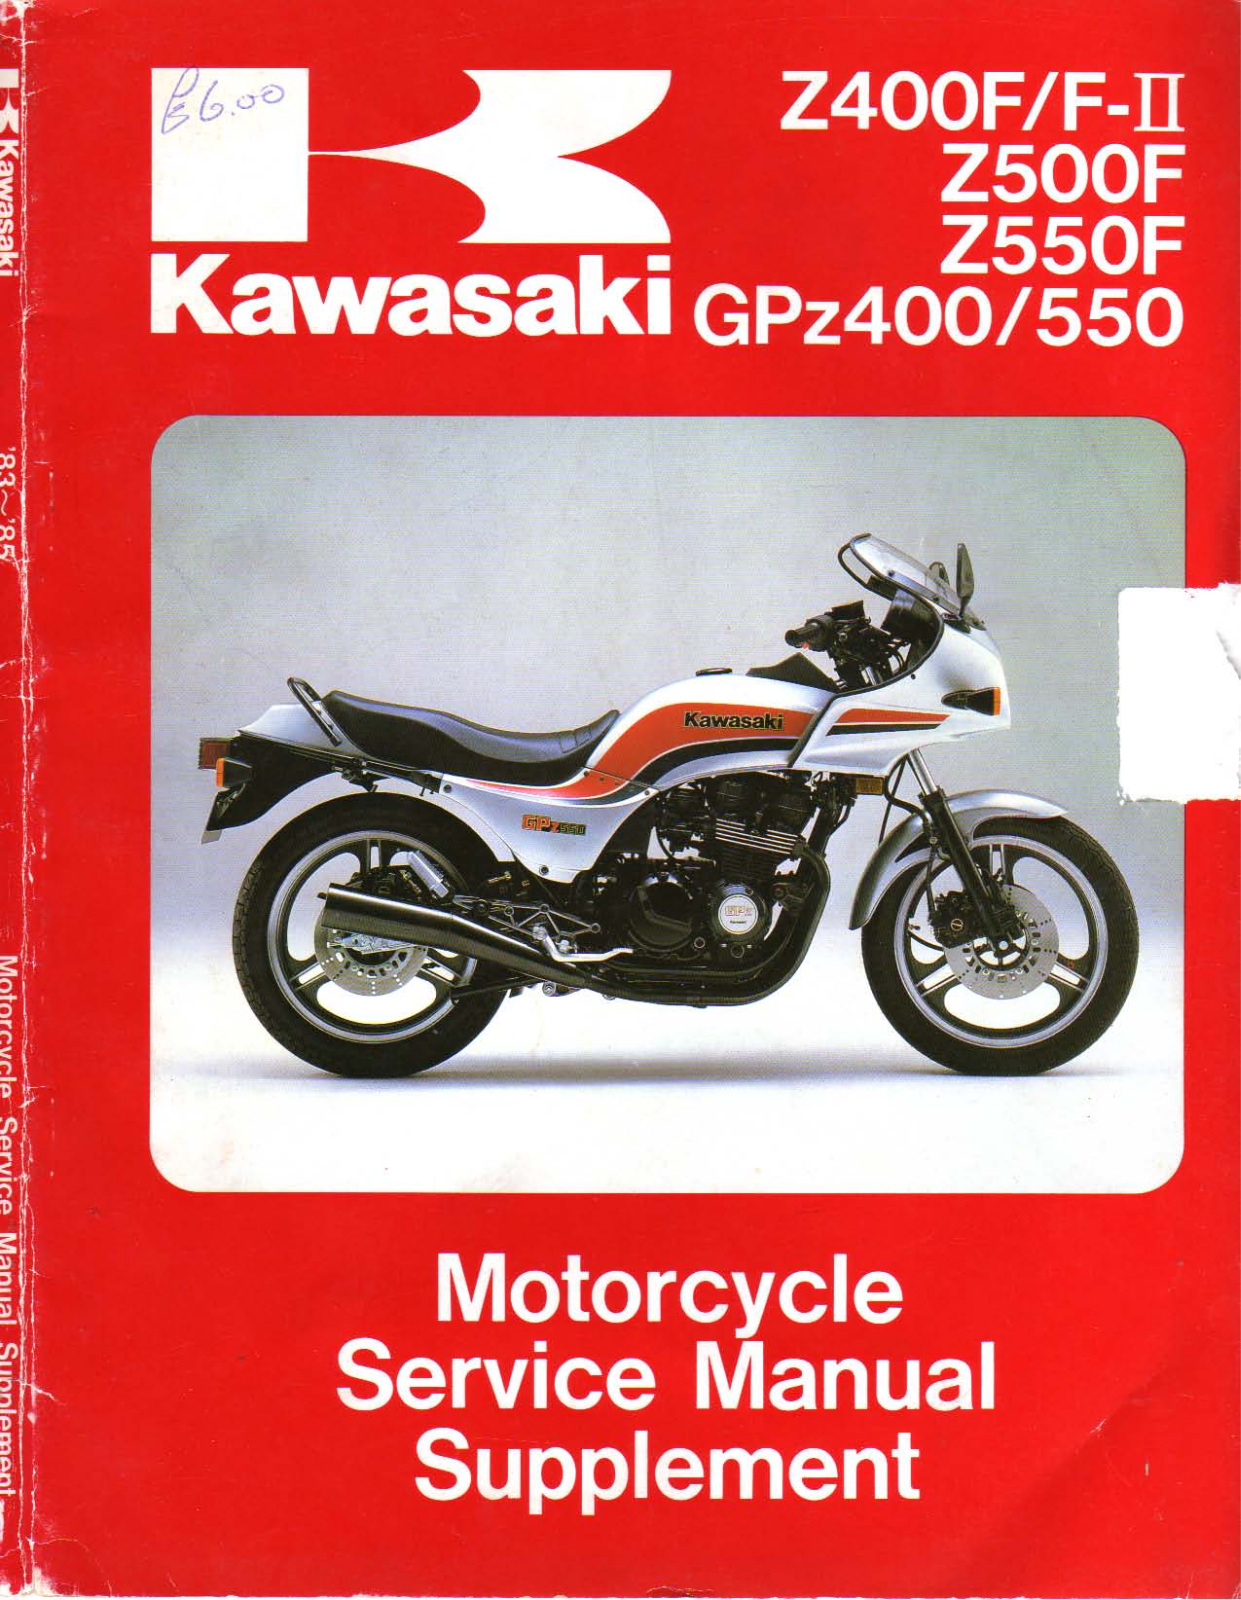 Kawasaki Z400 F-FII (1983-1985) User Manual